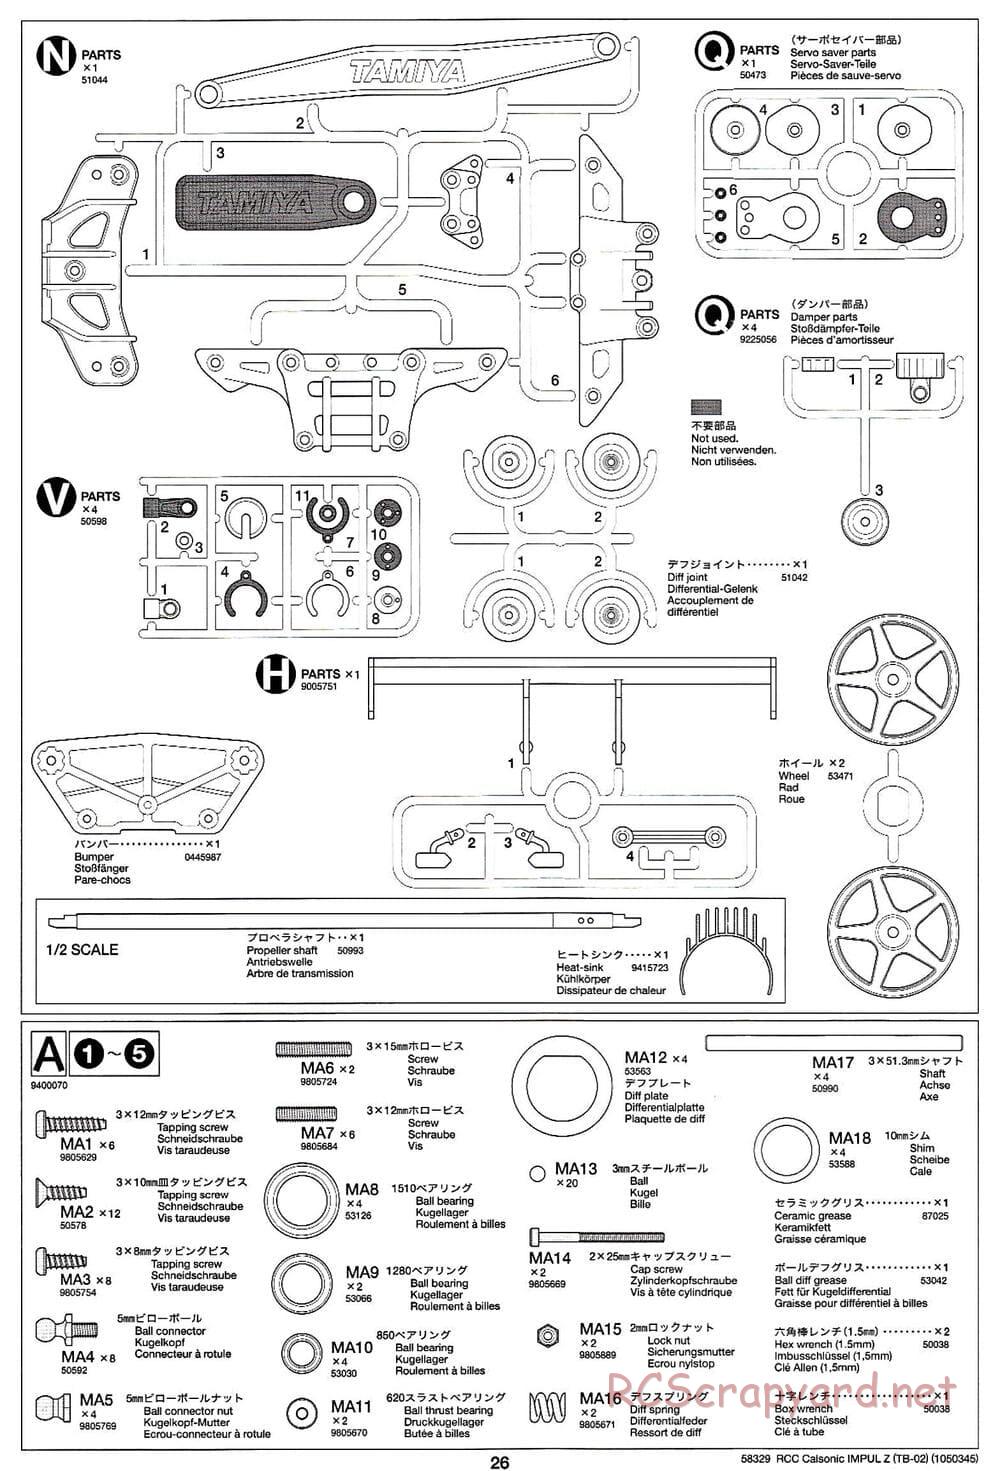 Tamiya - Calsonic Impul Z - TB-02 Chassis - Manual - Page 26